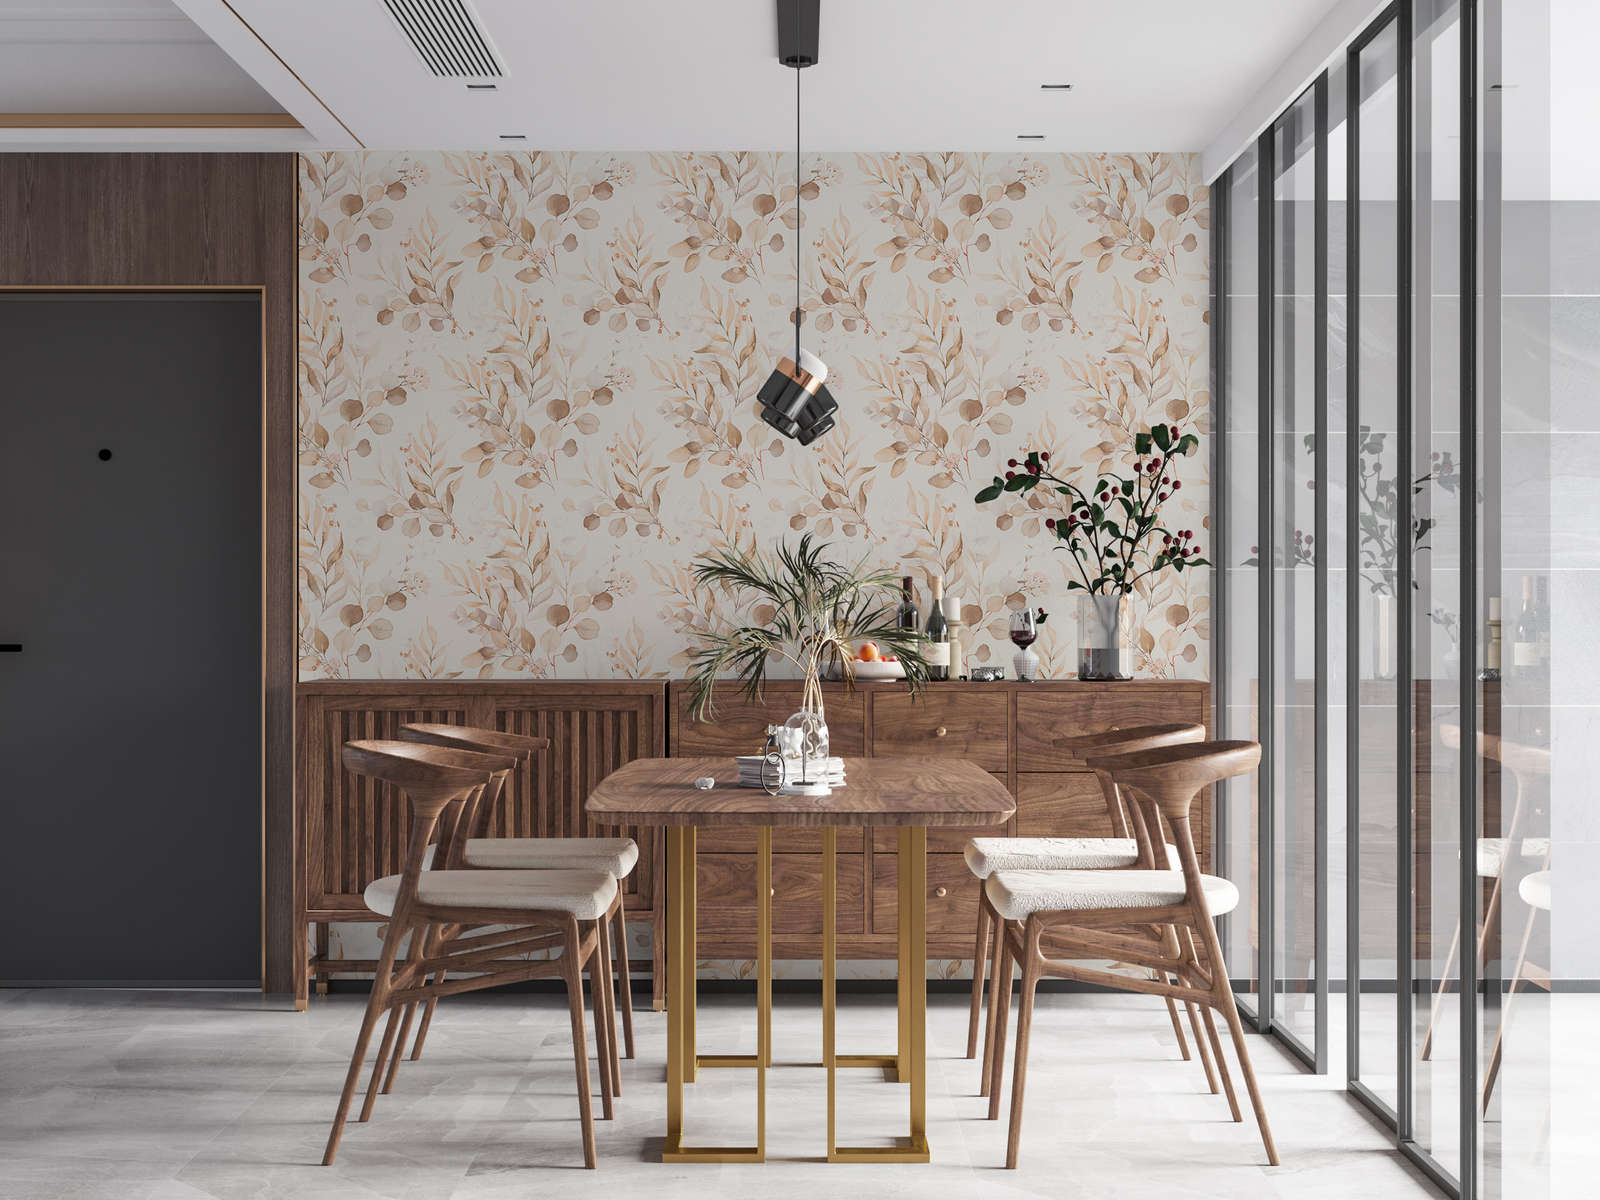             Non-woven wallpaper with watercolour leaf motif in warm tones - cream, beige
        